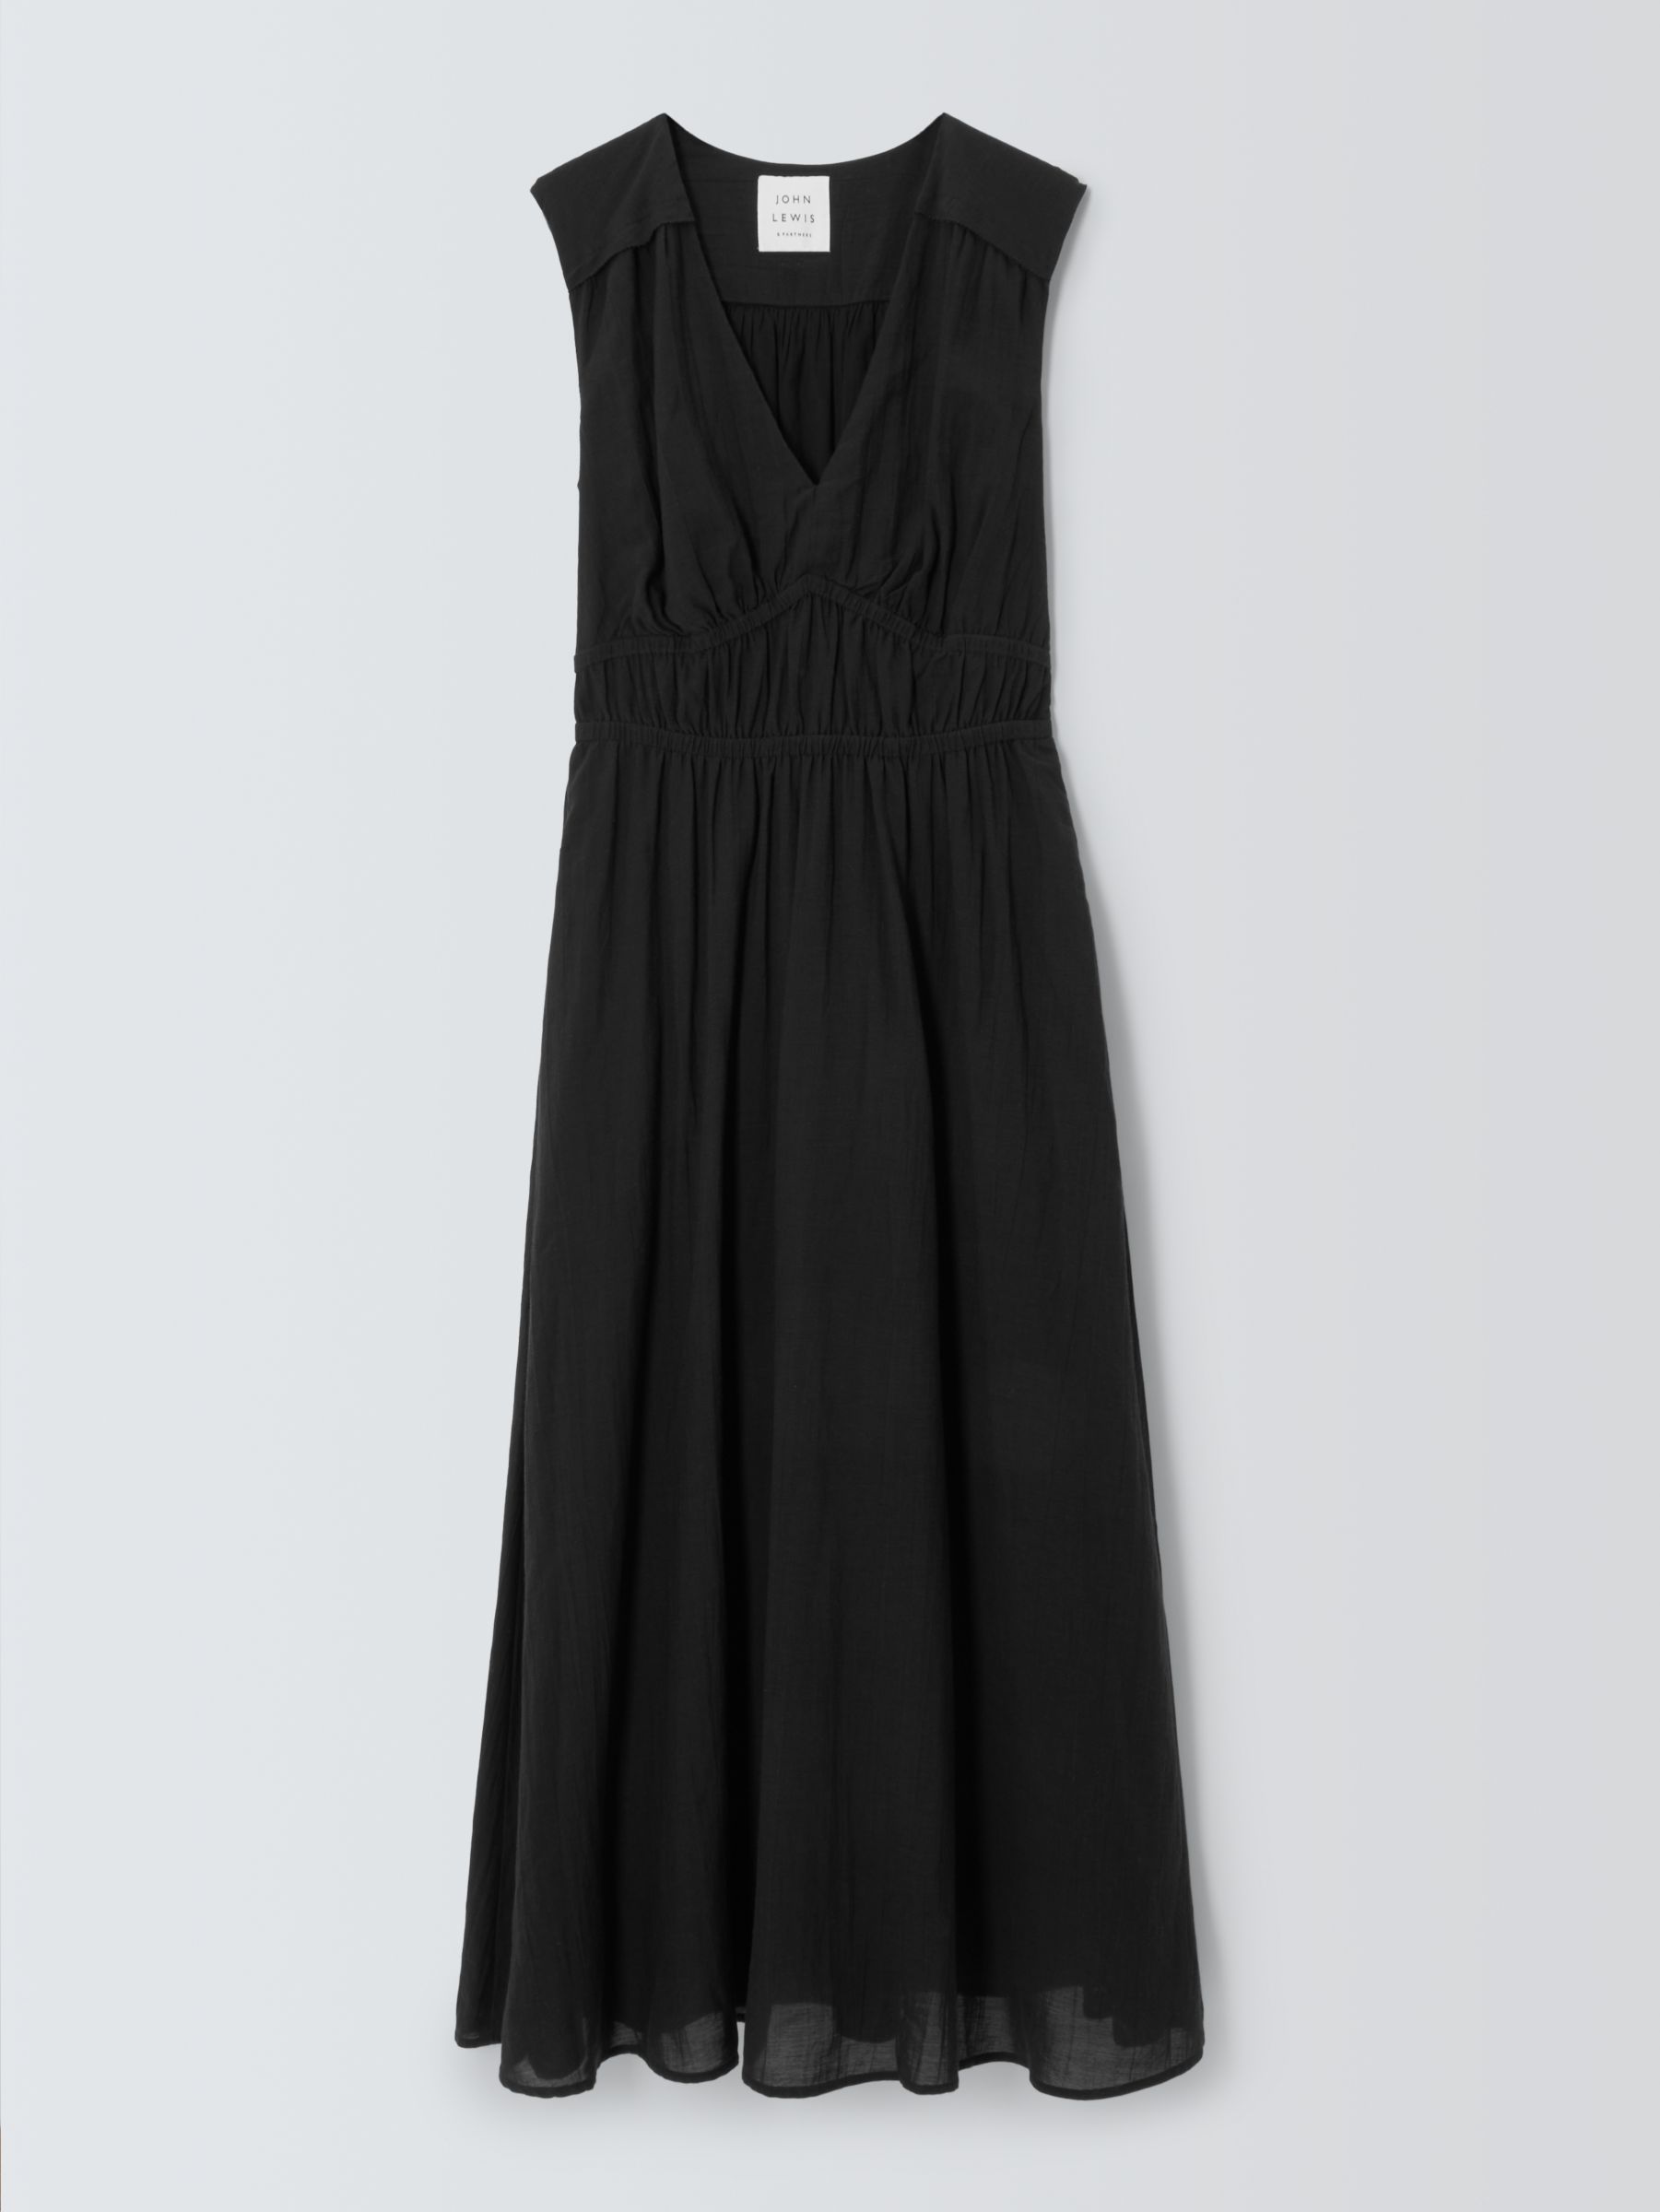 John Lewis Crinkle Cotton Blend Sleeveless Dress, Black, 8